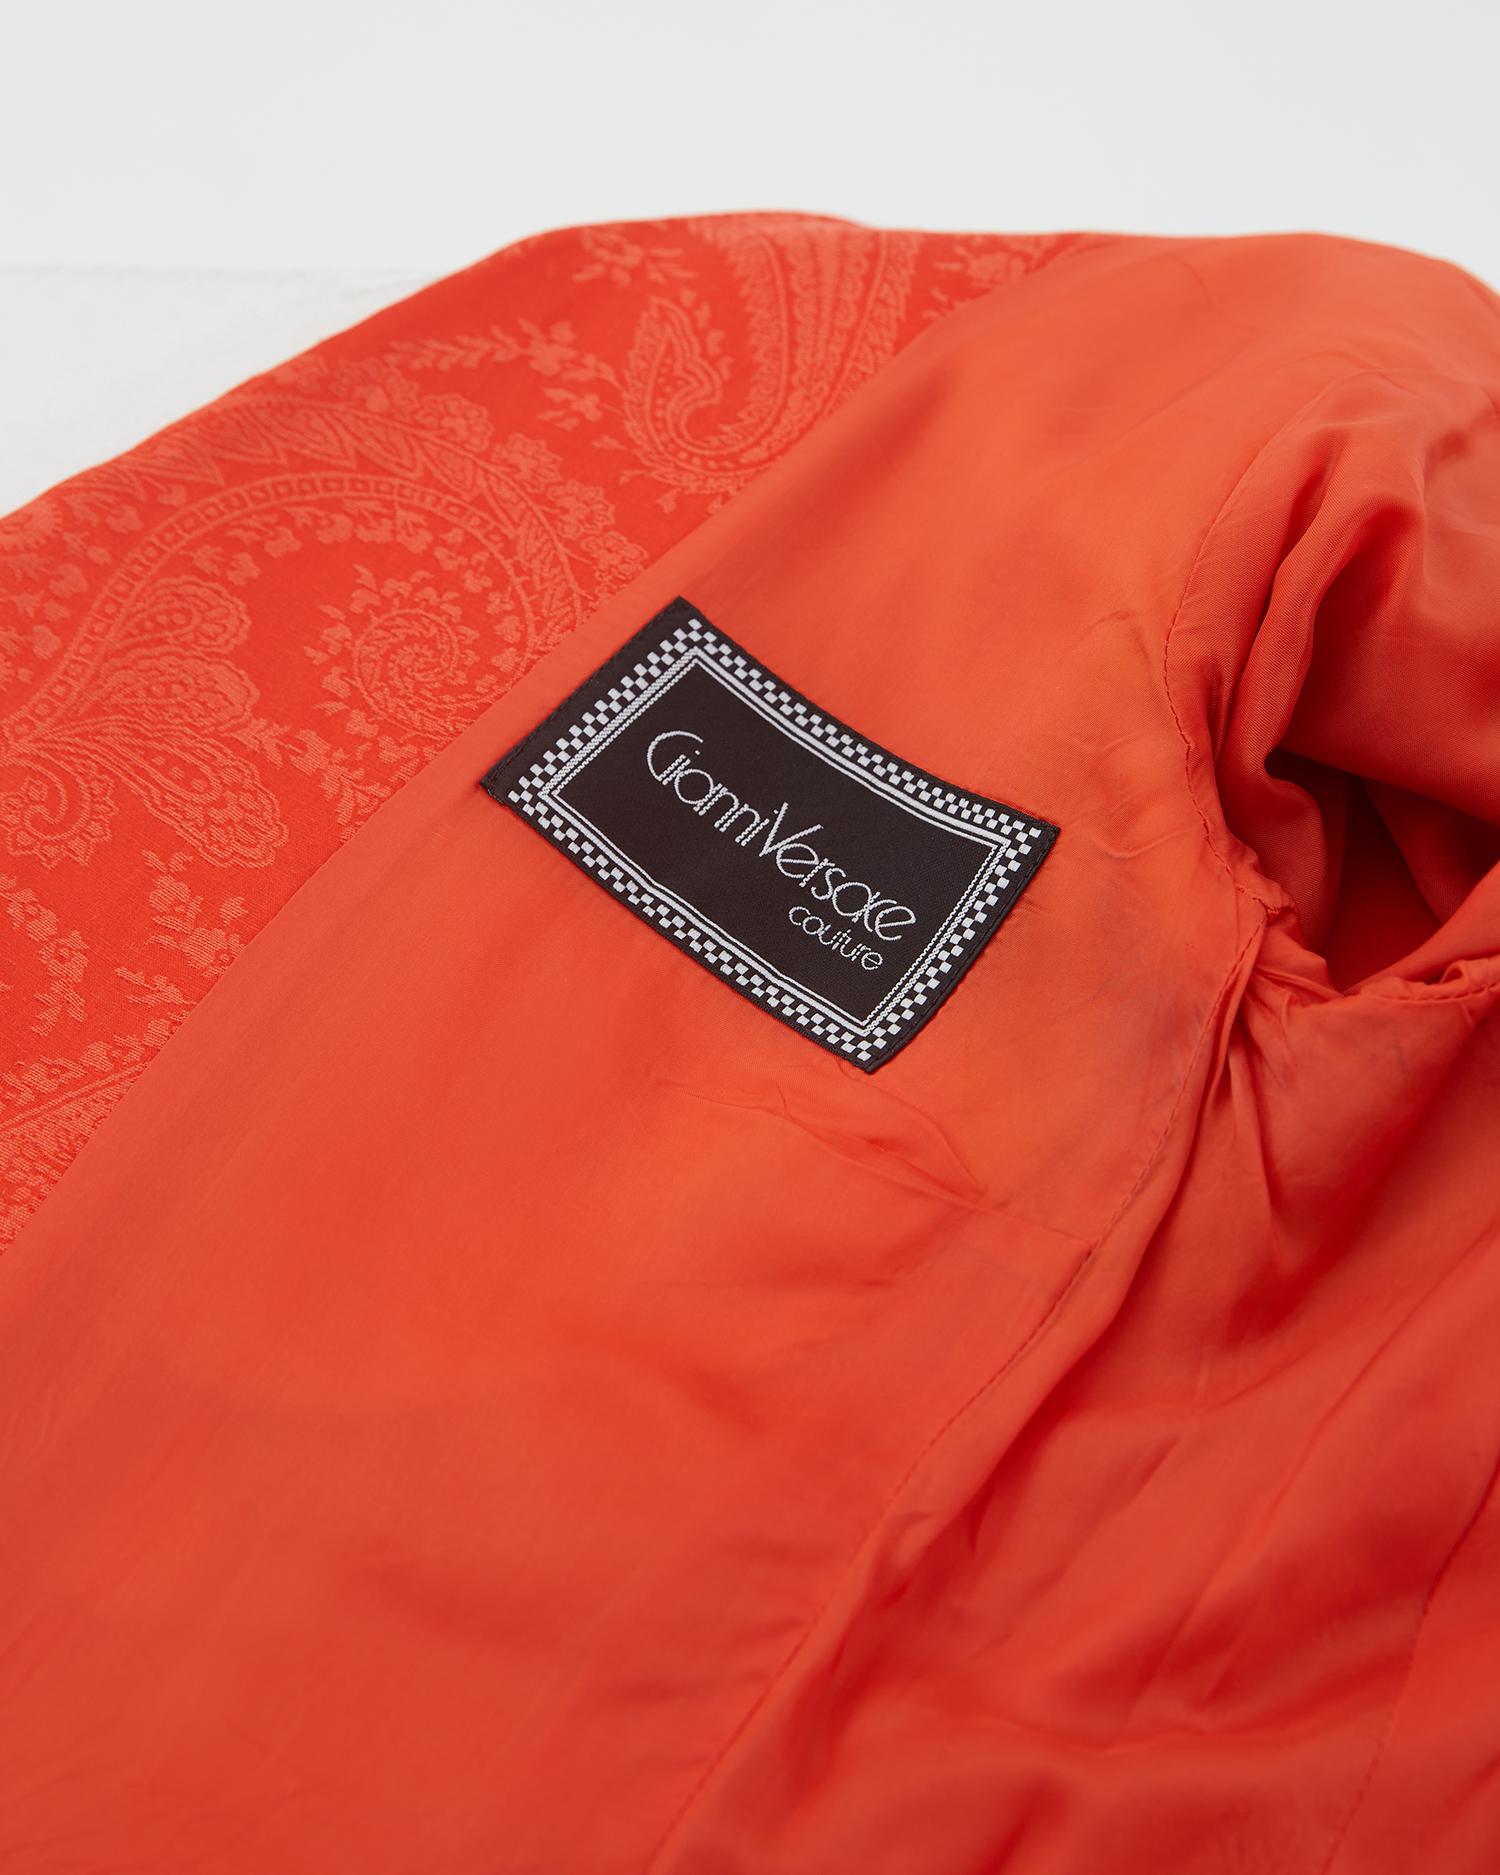 Gianni Versace S/S 1991 Orange silk paisley print blazer and skirt set For Sale 4